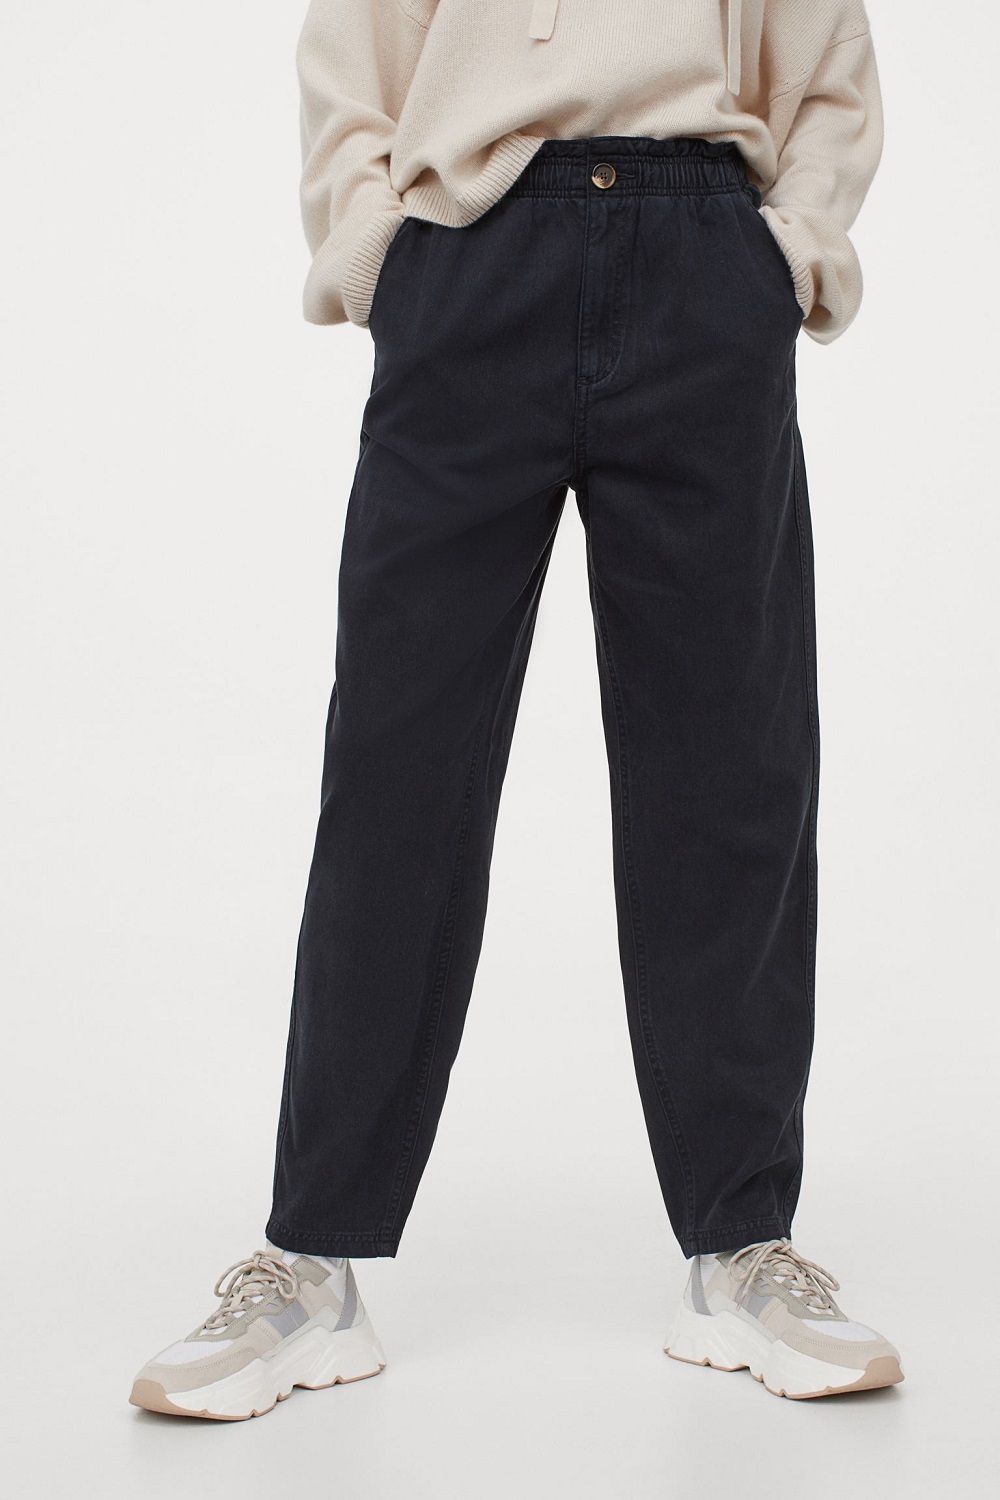 H&M udobne hlače proljeće 2021.